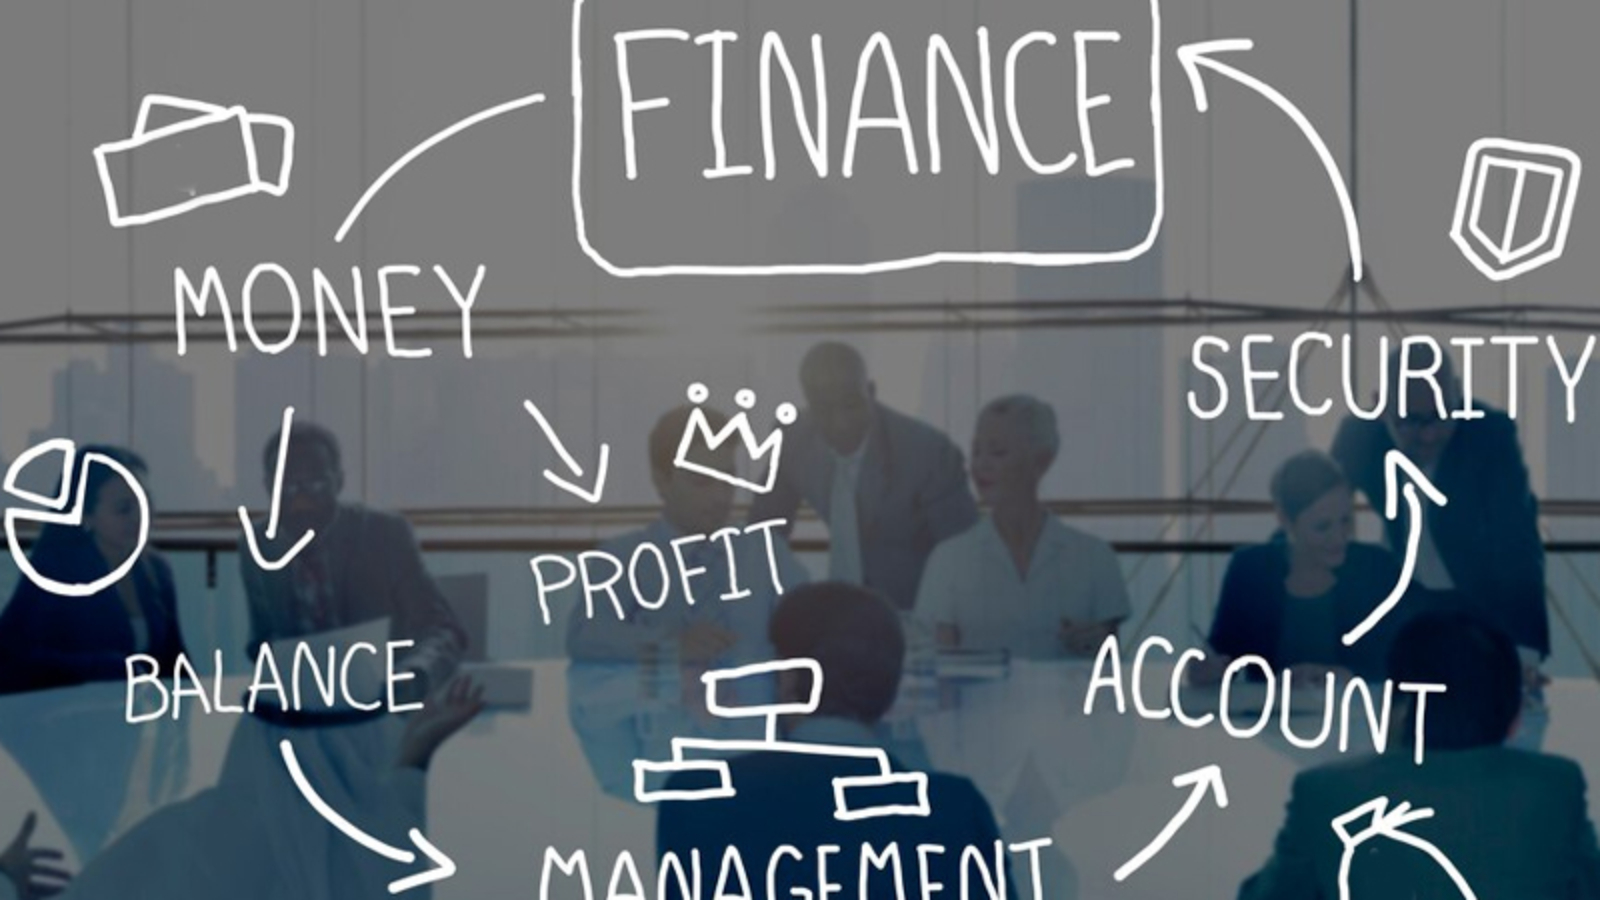 Blogs-Finance is a term broadly describing